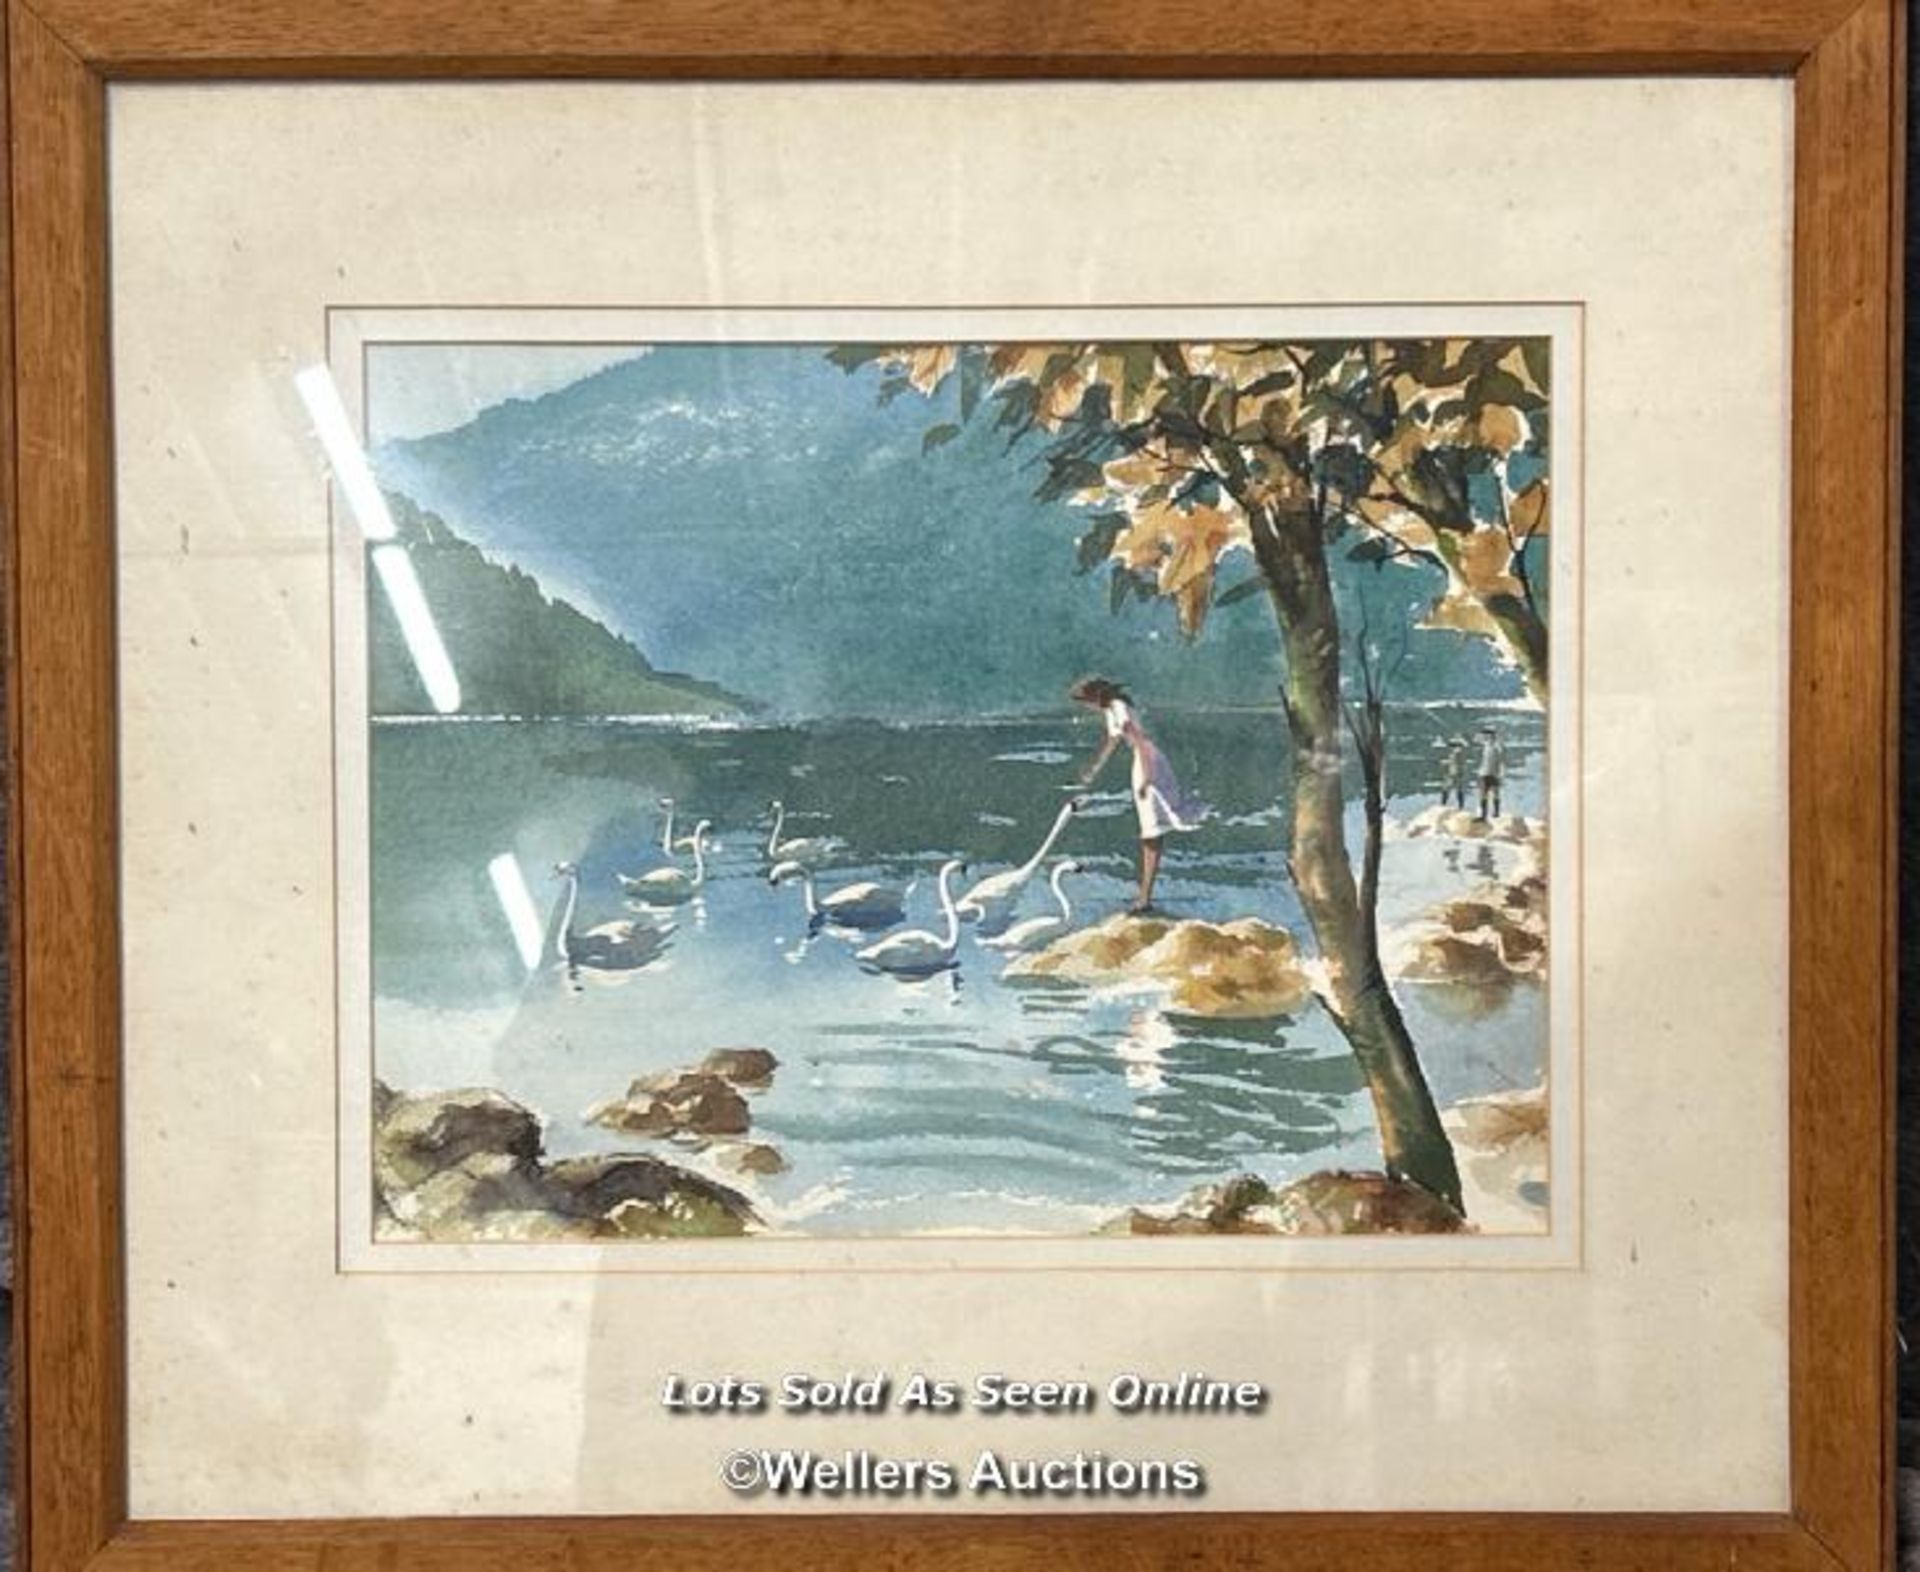 Bernard Bays (1910-1994) "Feeding the Swans" watercolour, signed, 32x25cm